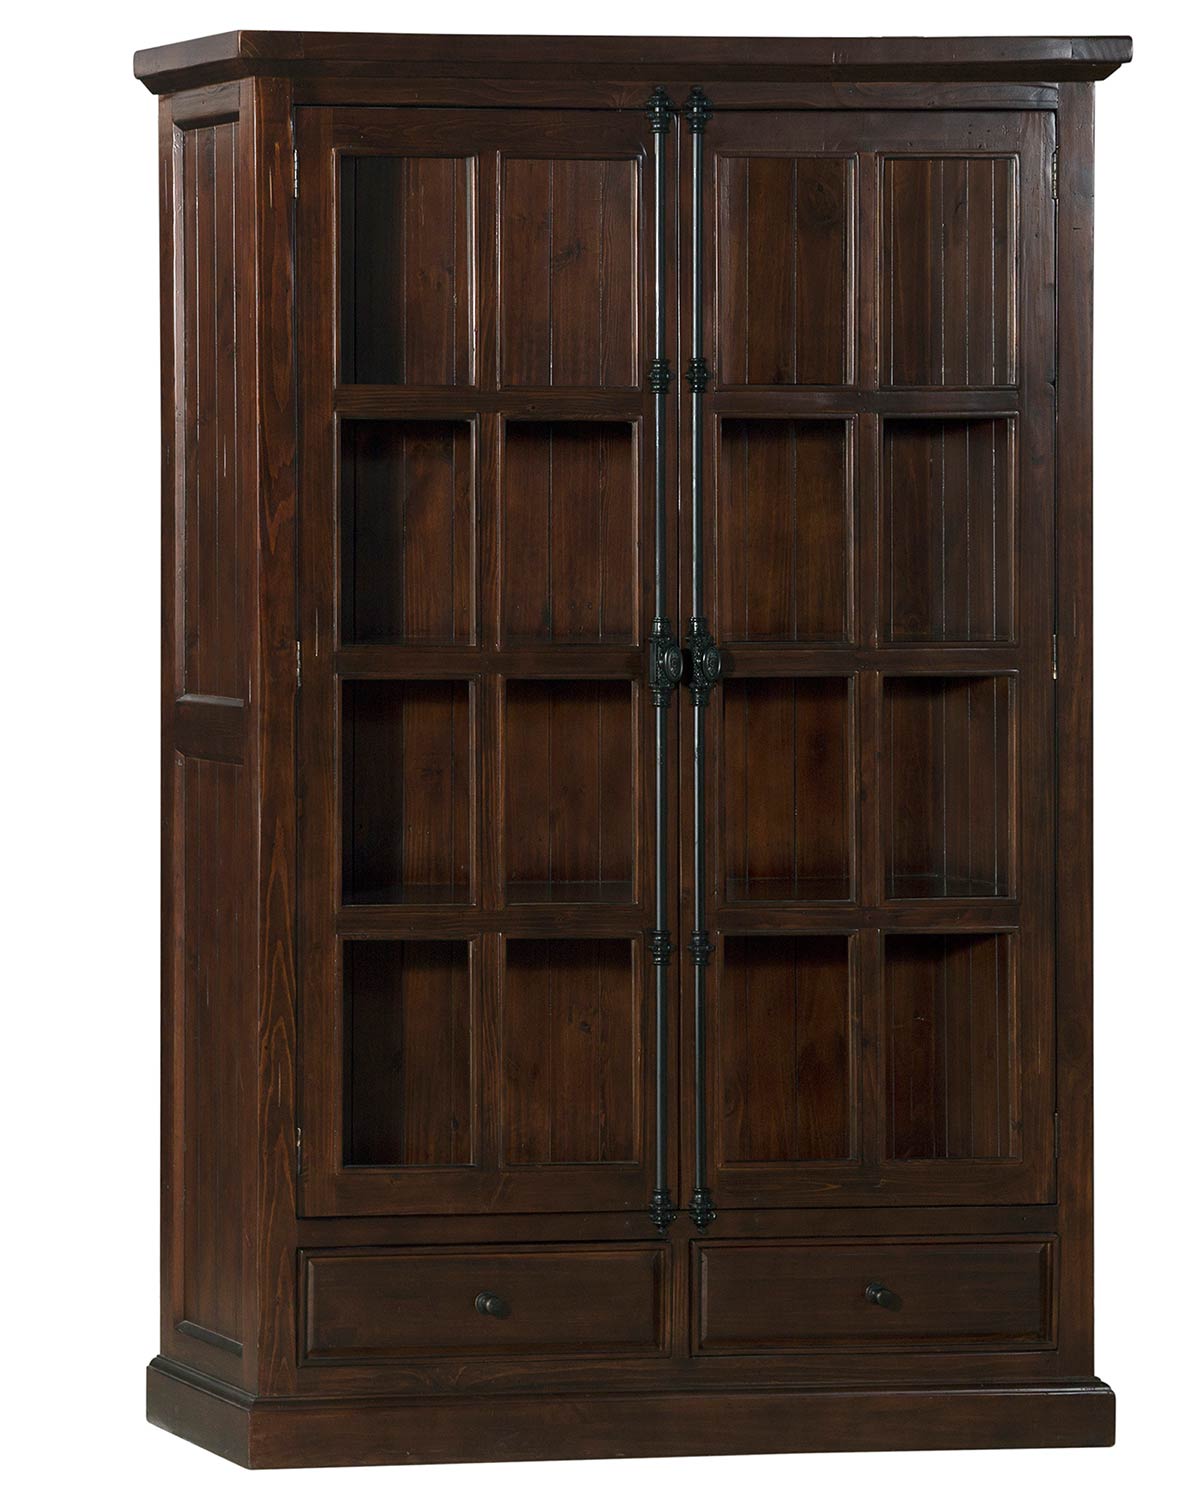 Hillsdale Tuscan Retreat Double Door Cabinet - Park Avenue